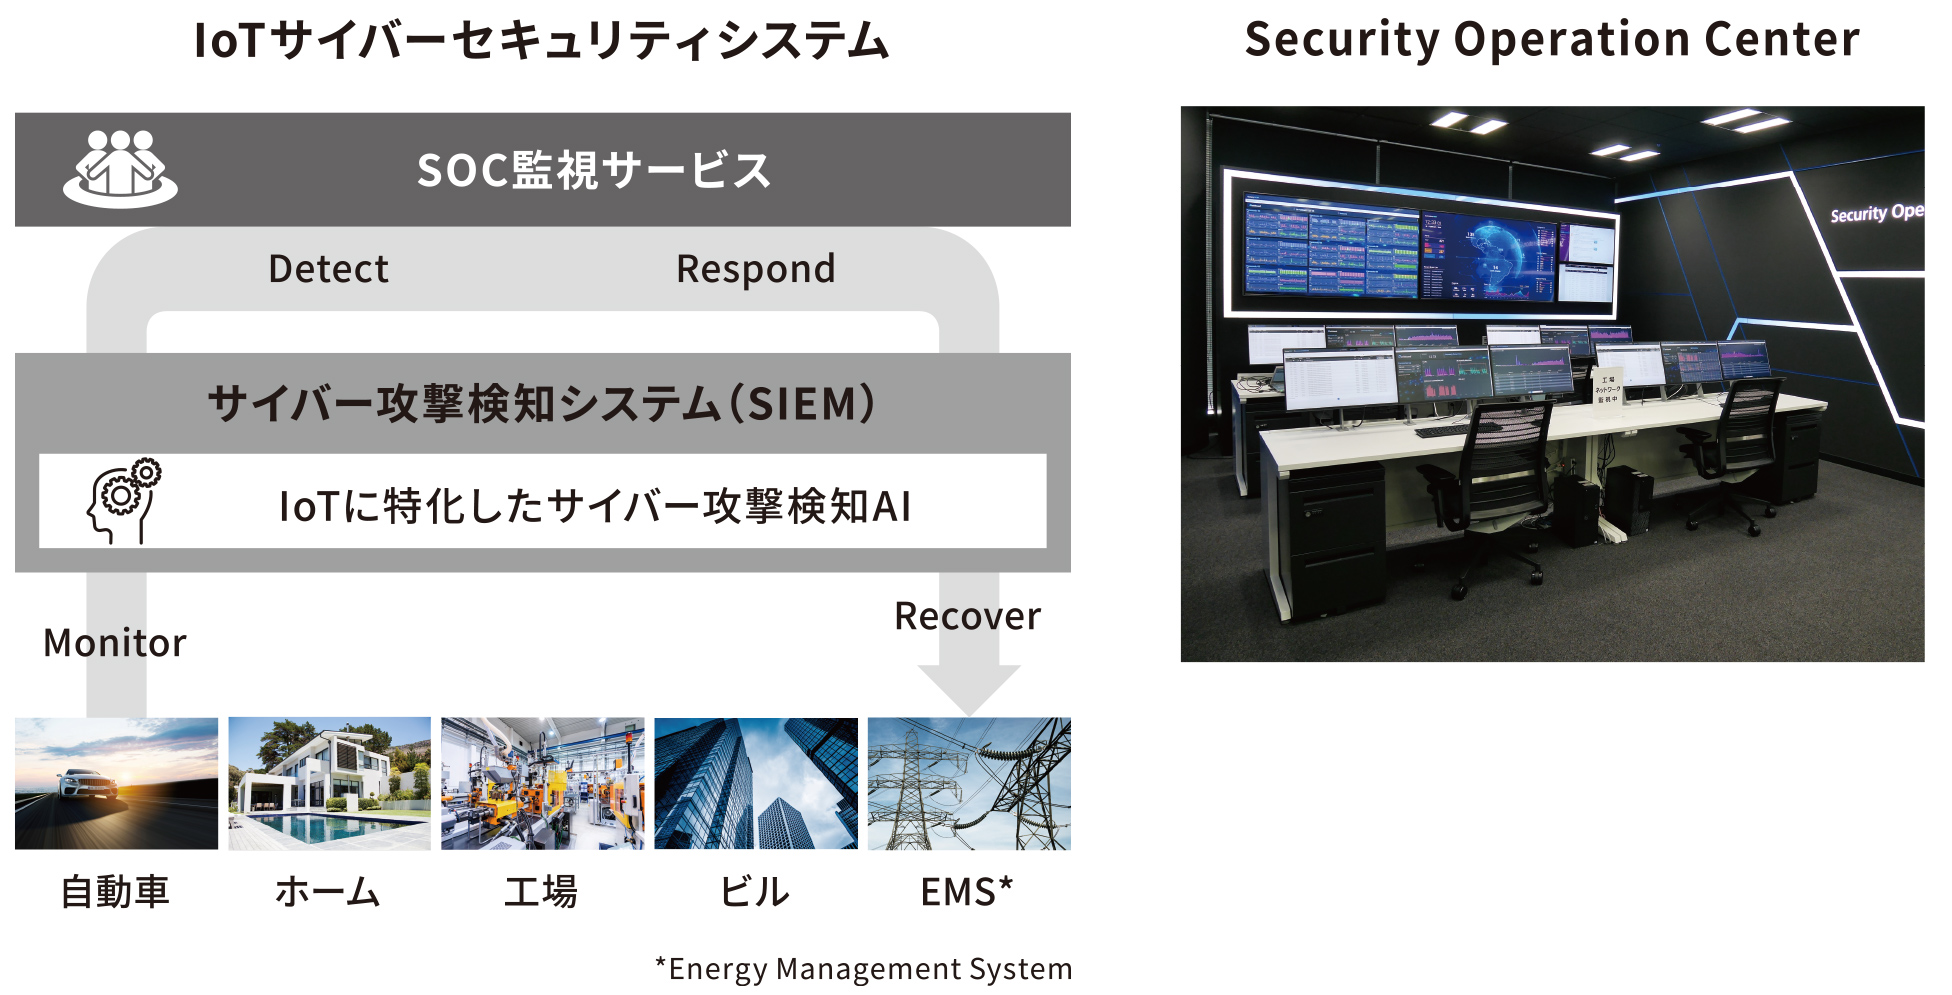 IoTサイバーセキュリティシステムの概念図と近未来的なセキュリティーオペレーションセンターの写真